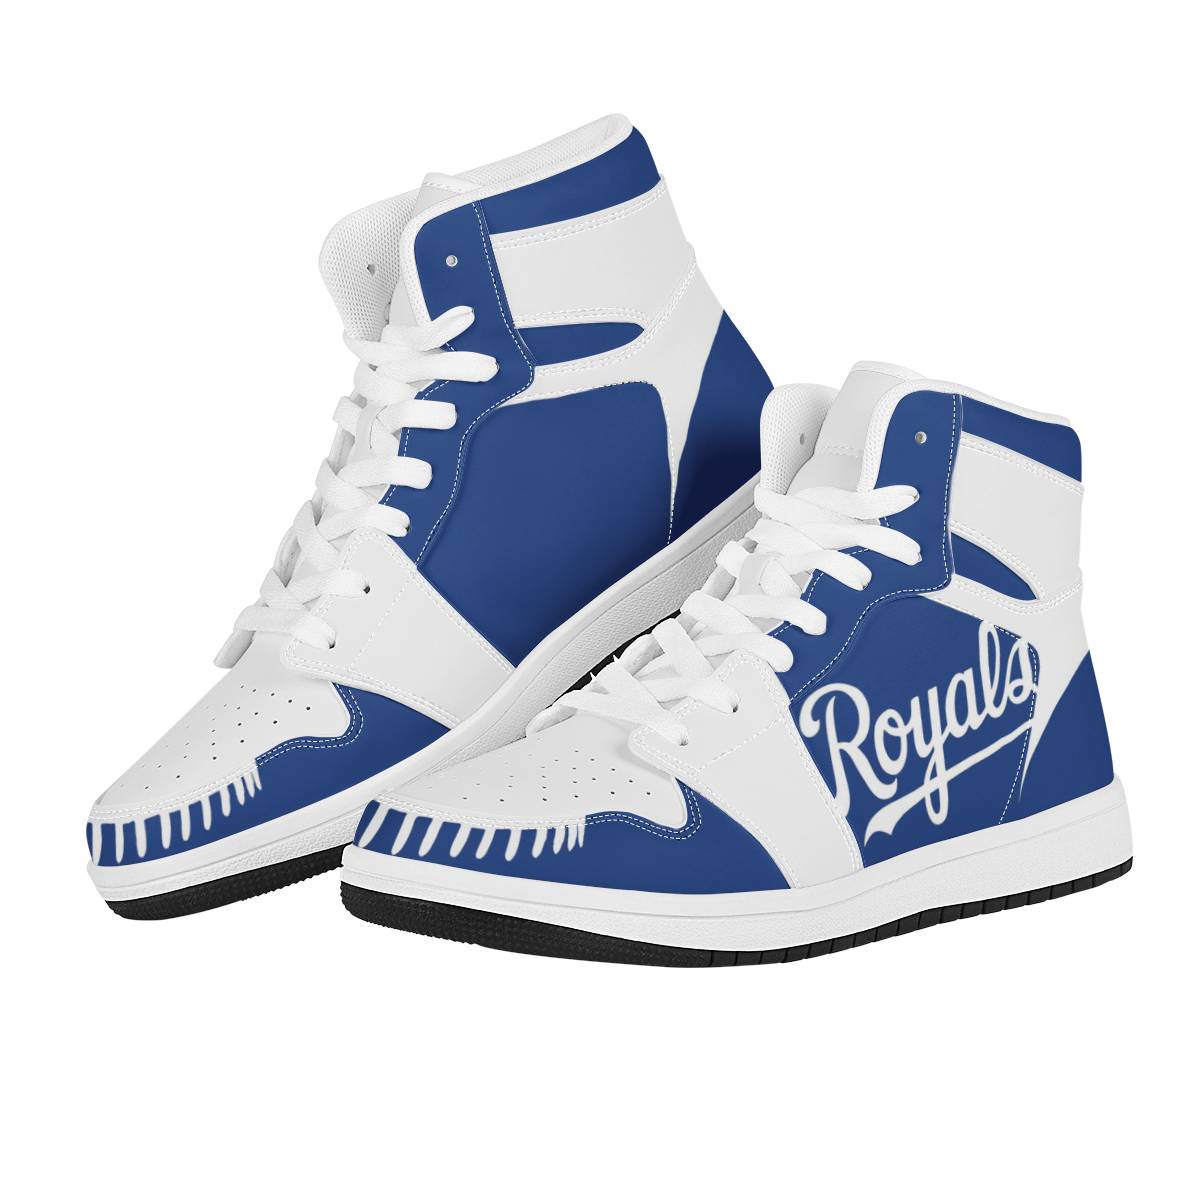 Women's Kansas City Royals High Top Leather AJ1 Sneakers 001